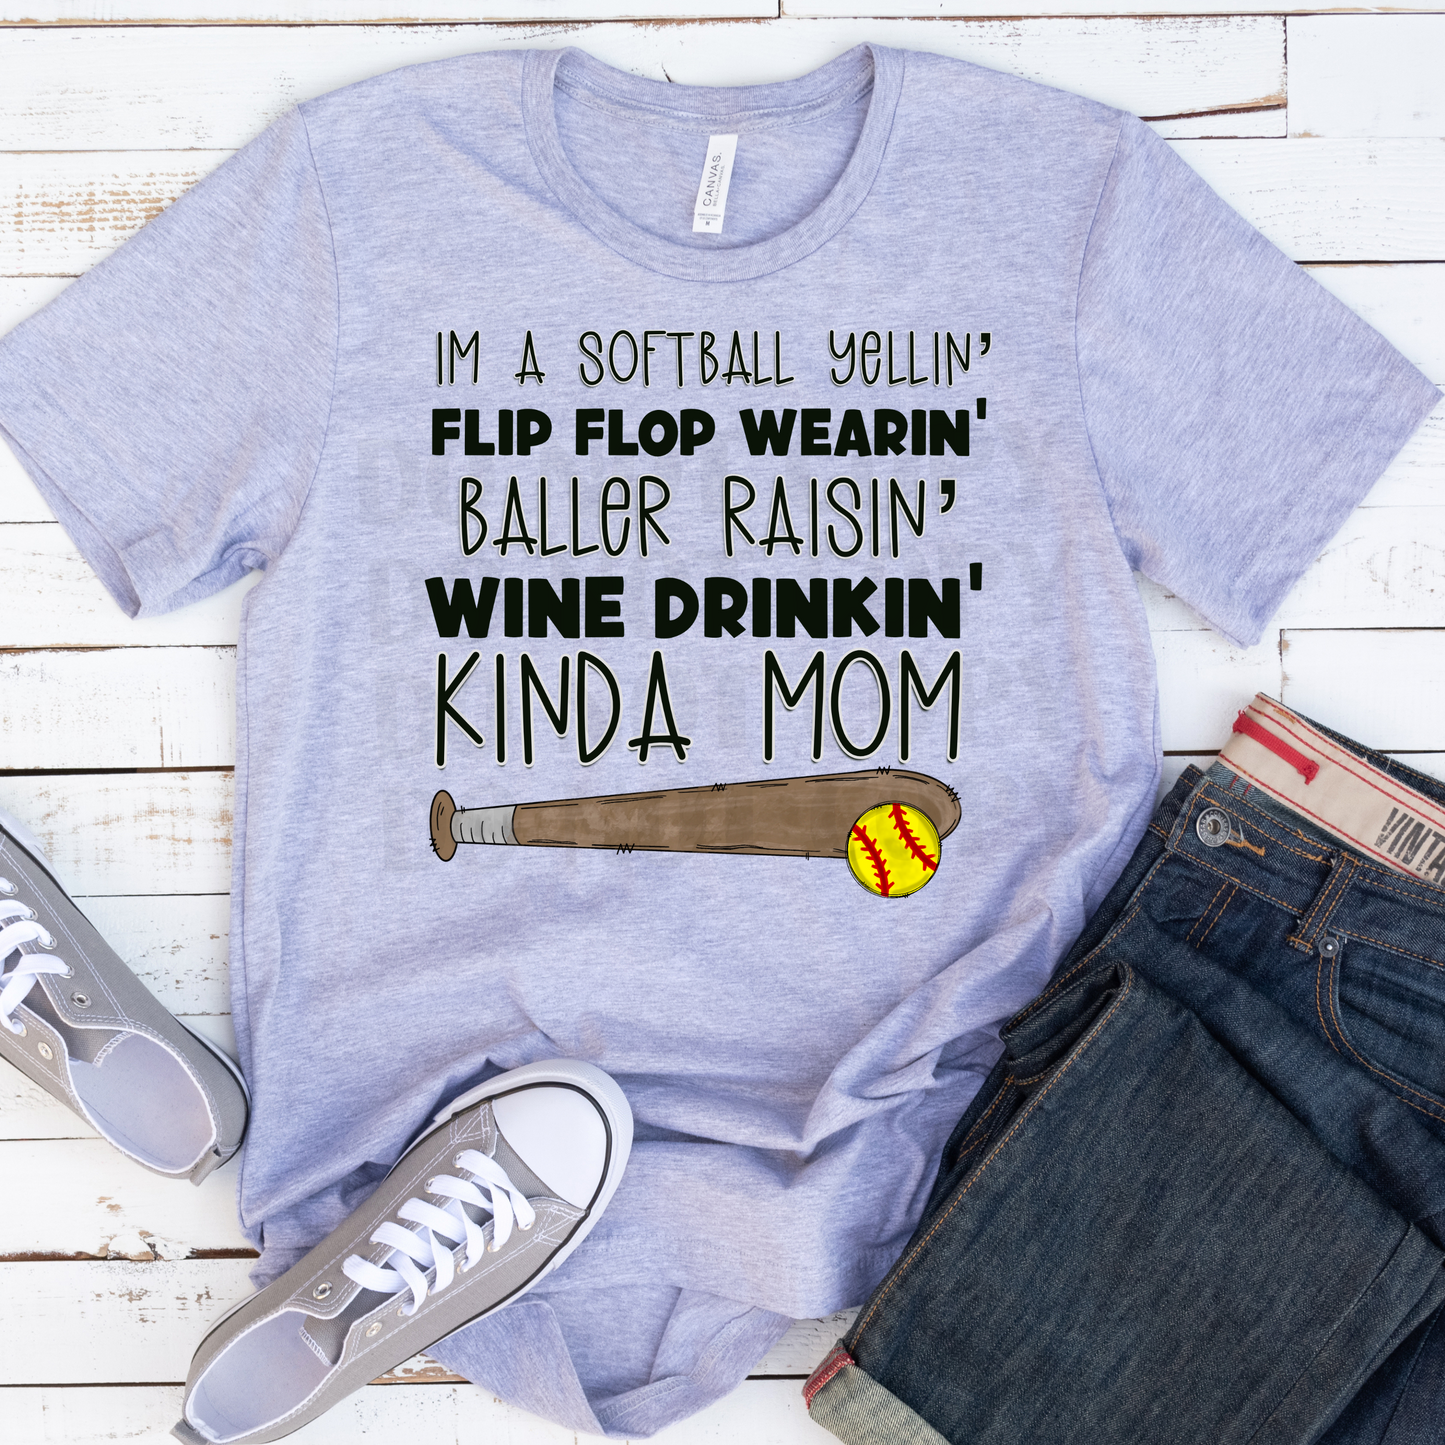 Softball yellin' wine drinkin' kinda mom  DTF